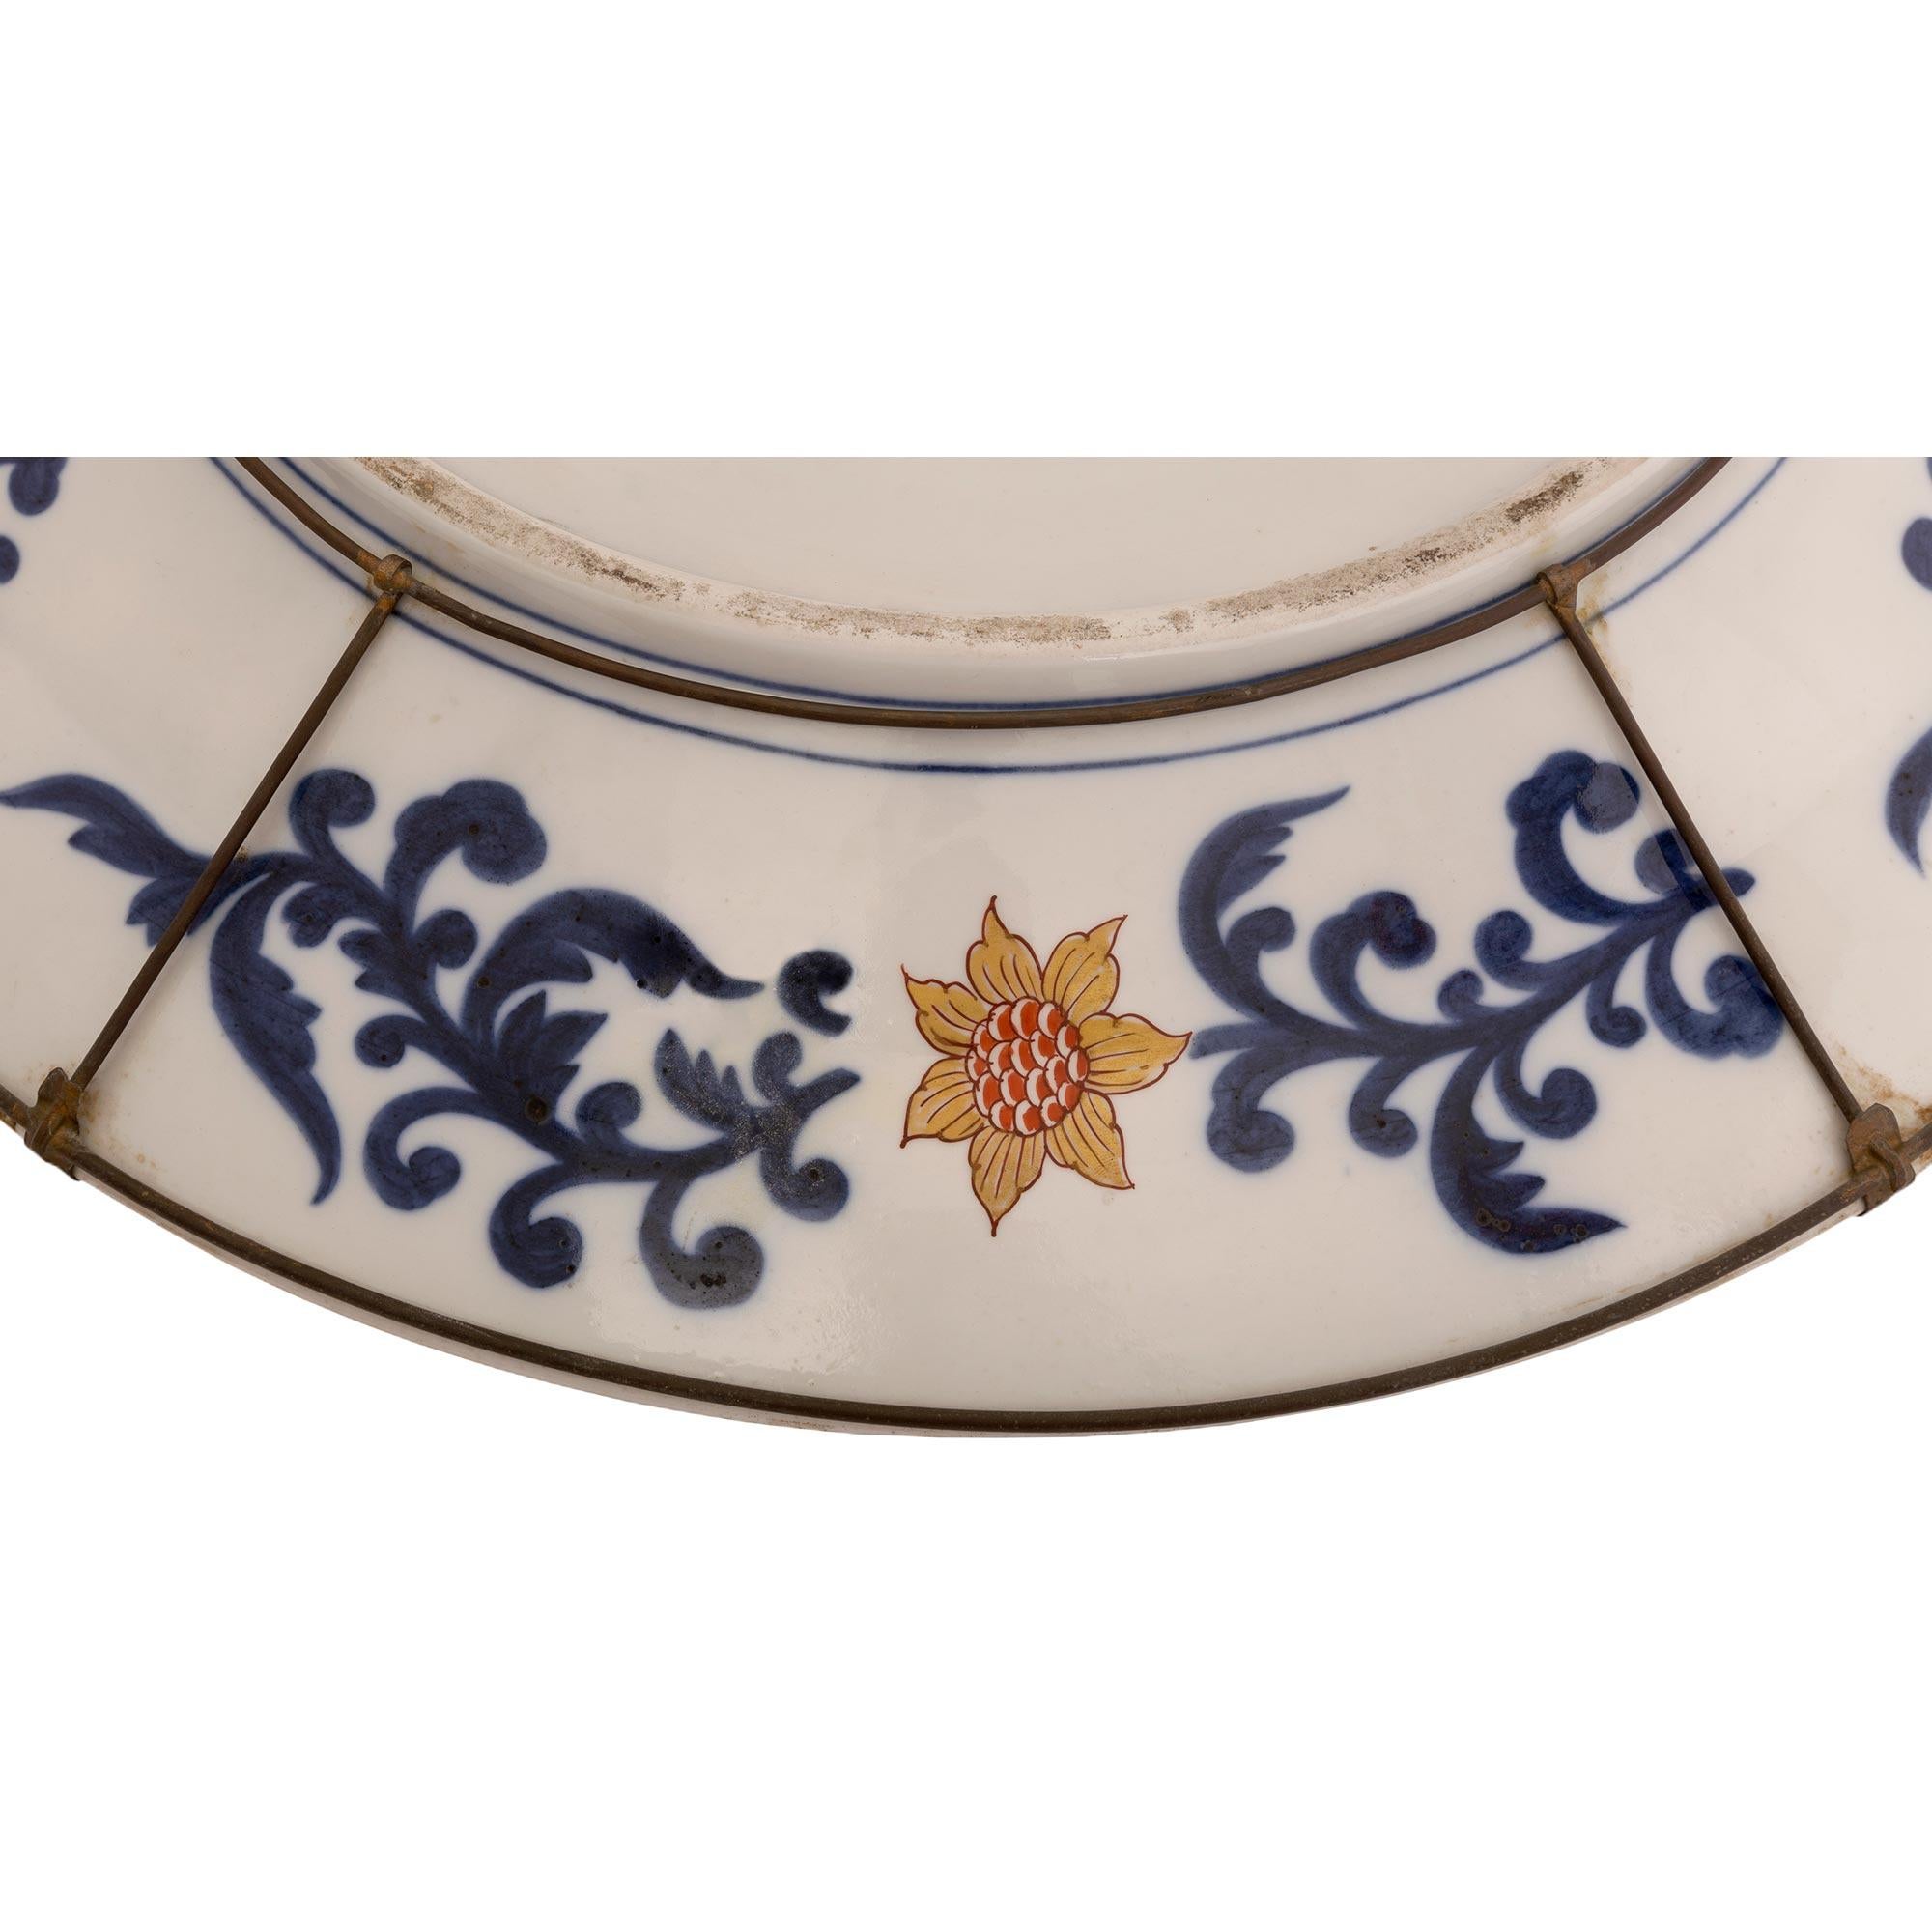 Pair of Japanese 19th Century Imari Porcelain Plates For Sale 5